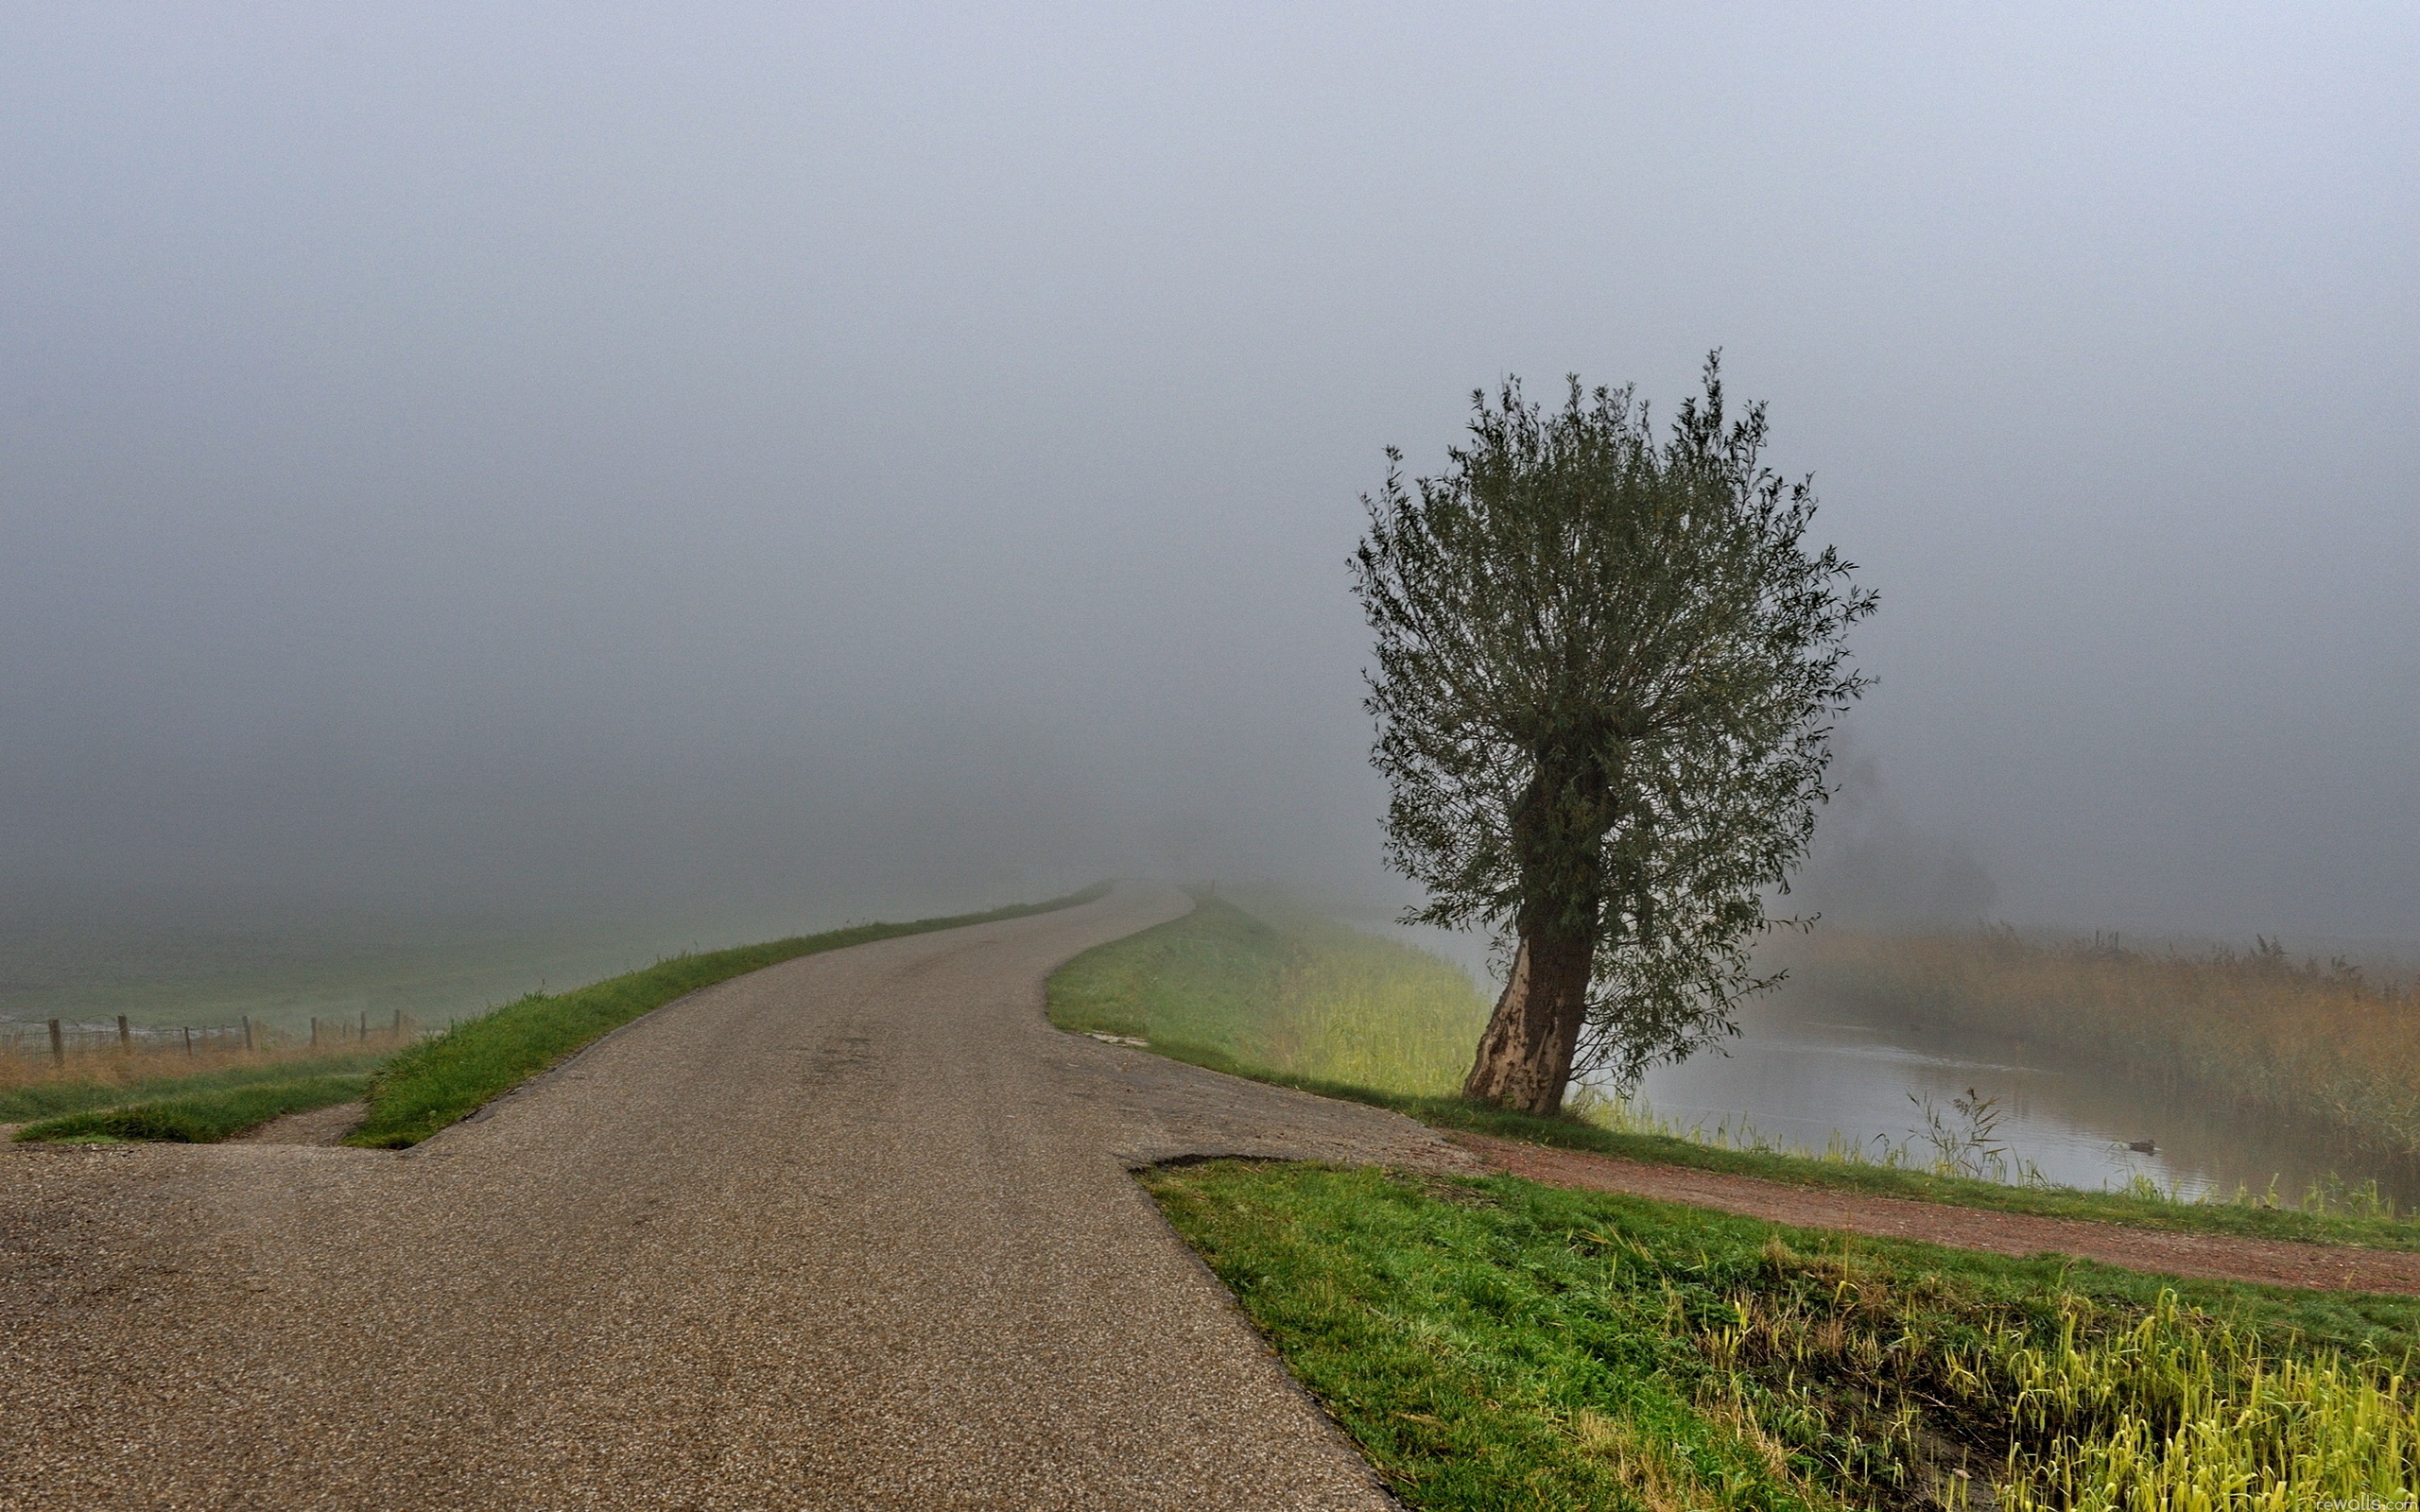 Селенский не расти у дороги. Туман. Дорога в тумане. Дорога и туман природа вокруг. Дорога с деревьями по обеим сторонам.